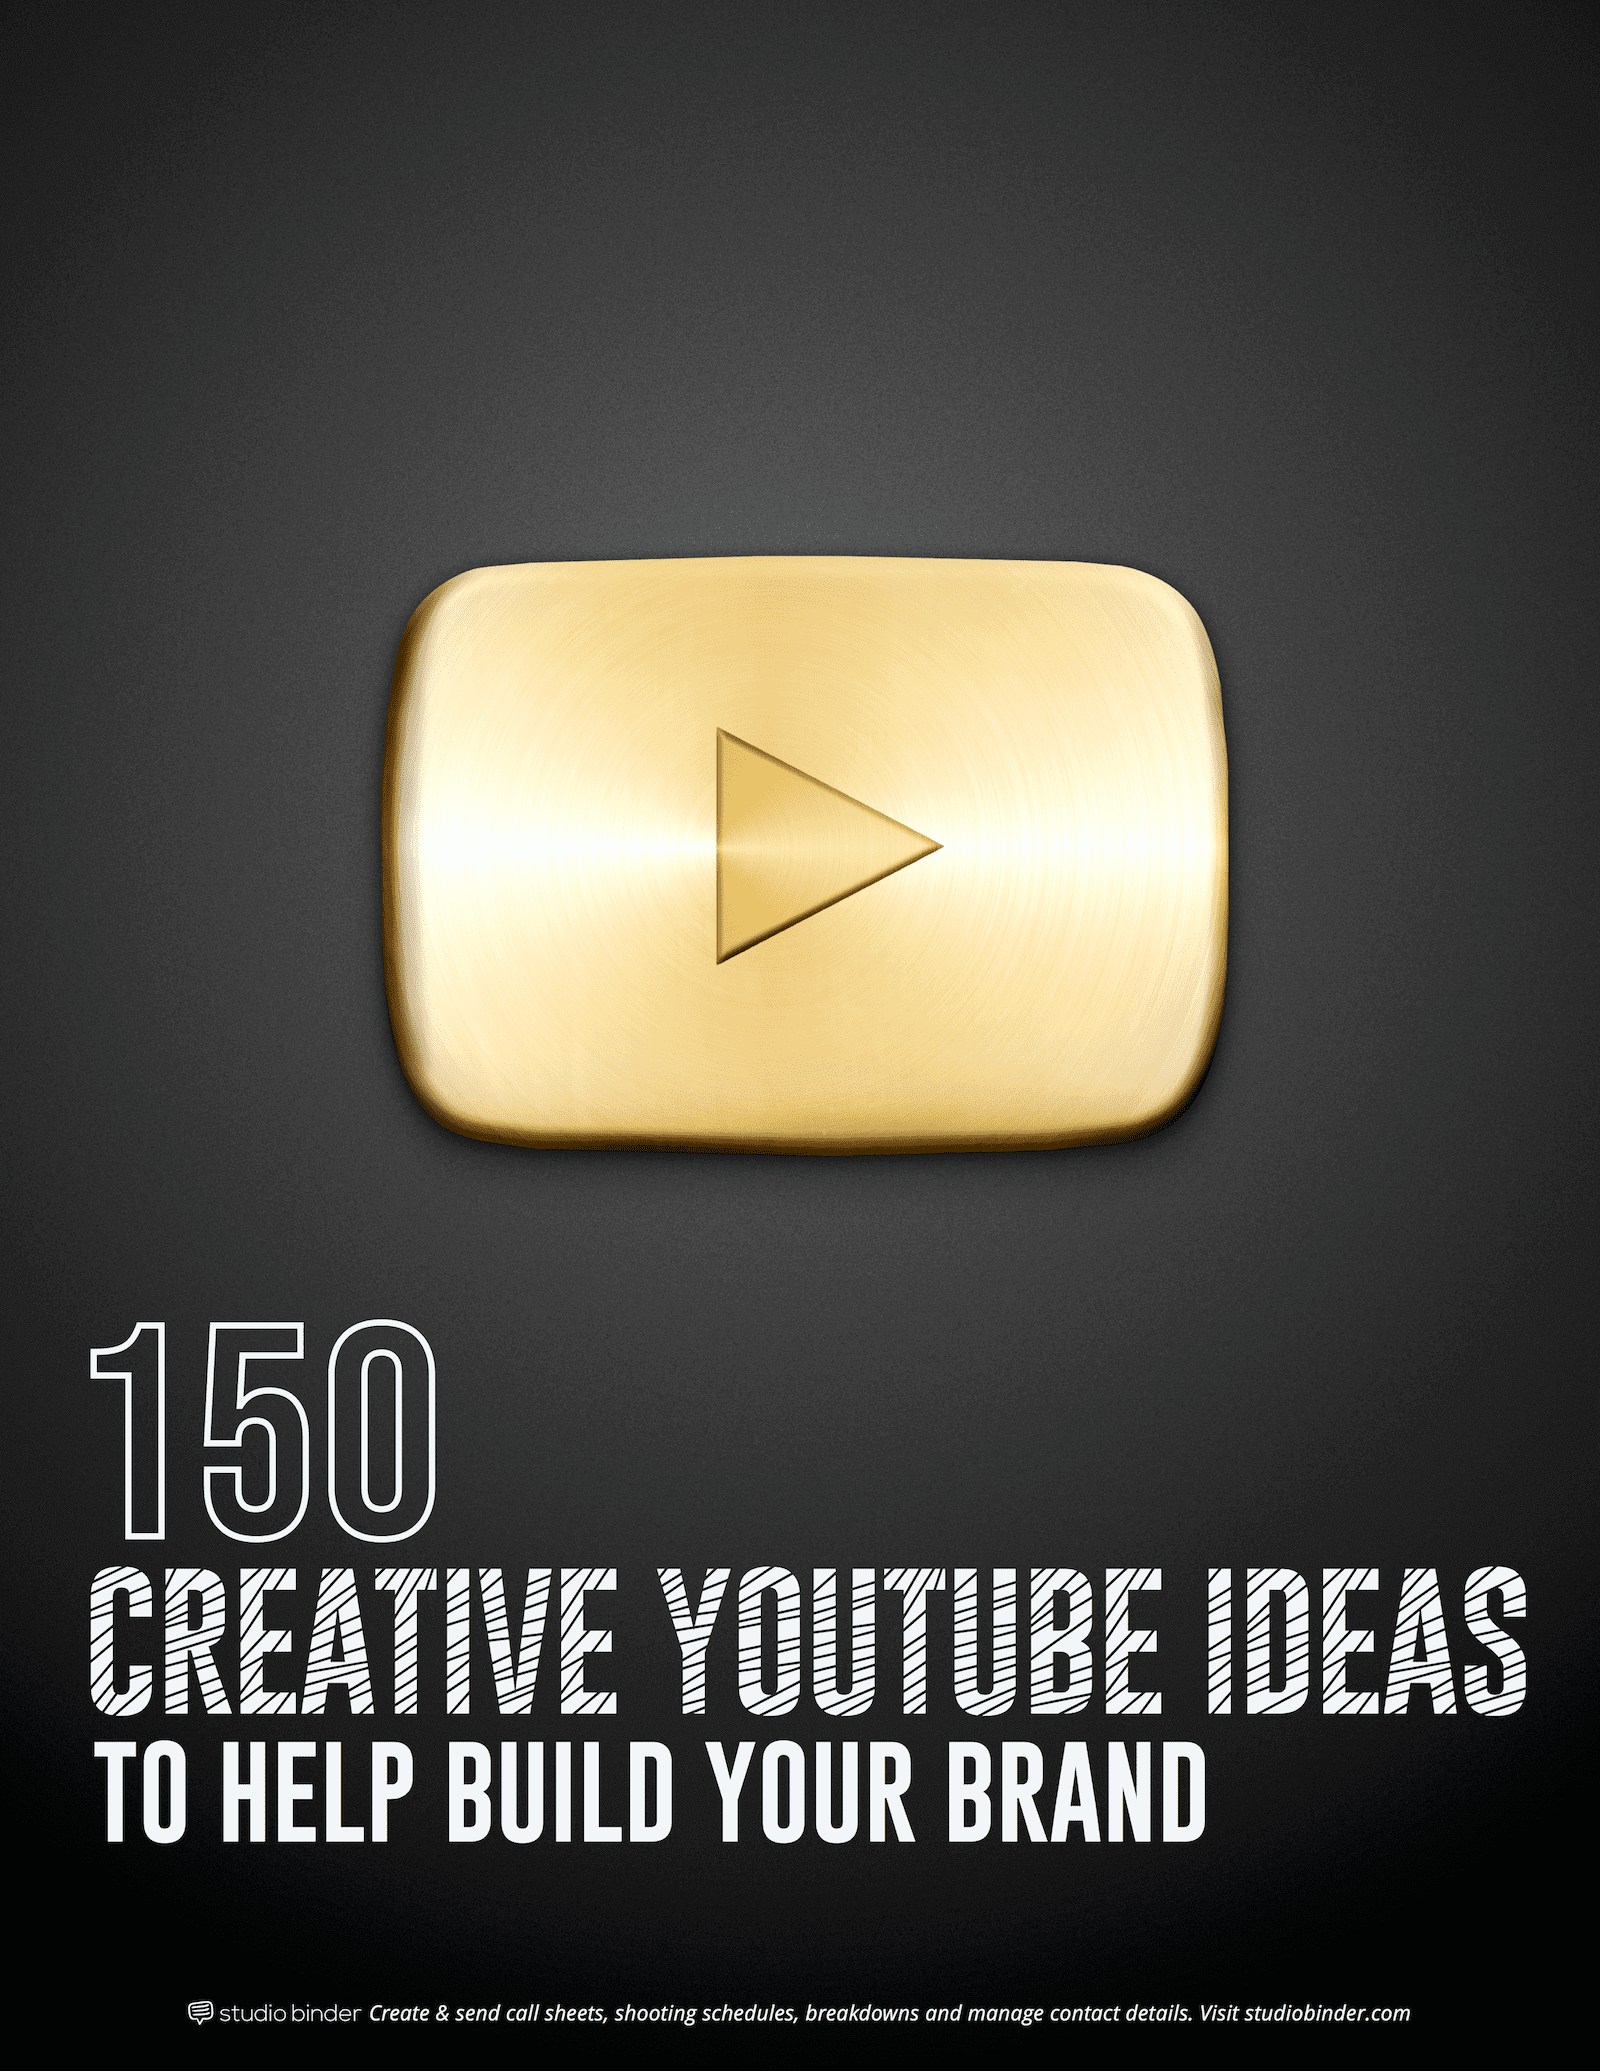 161 Creative Youtube Video Ideas Free Channel Ideas List